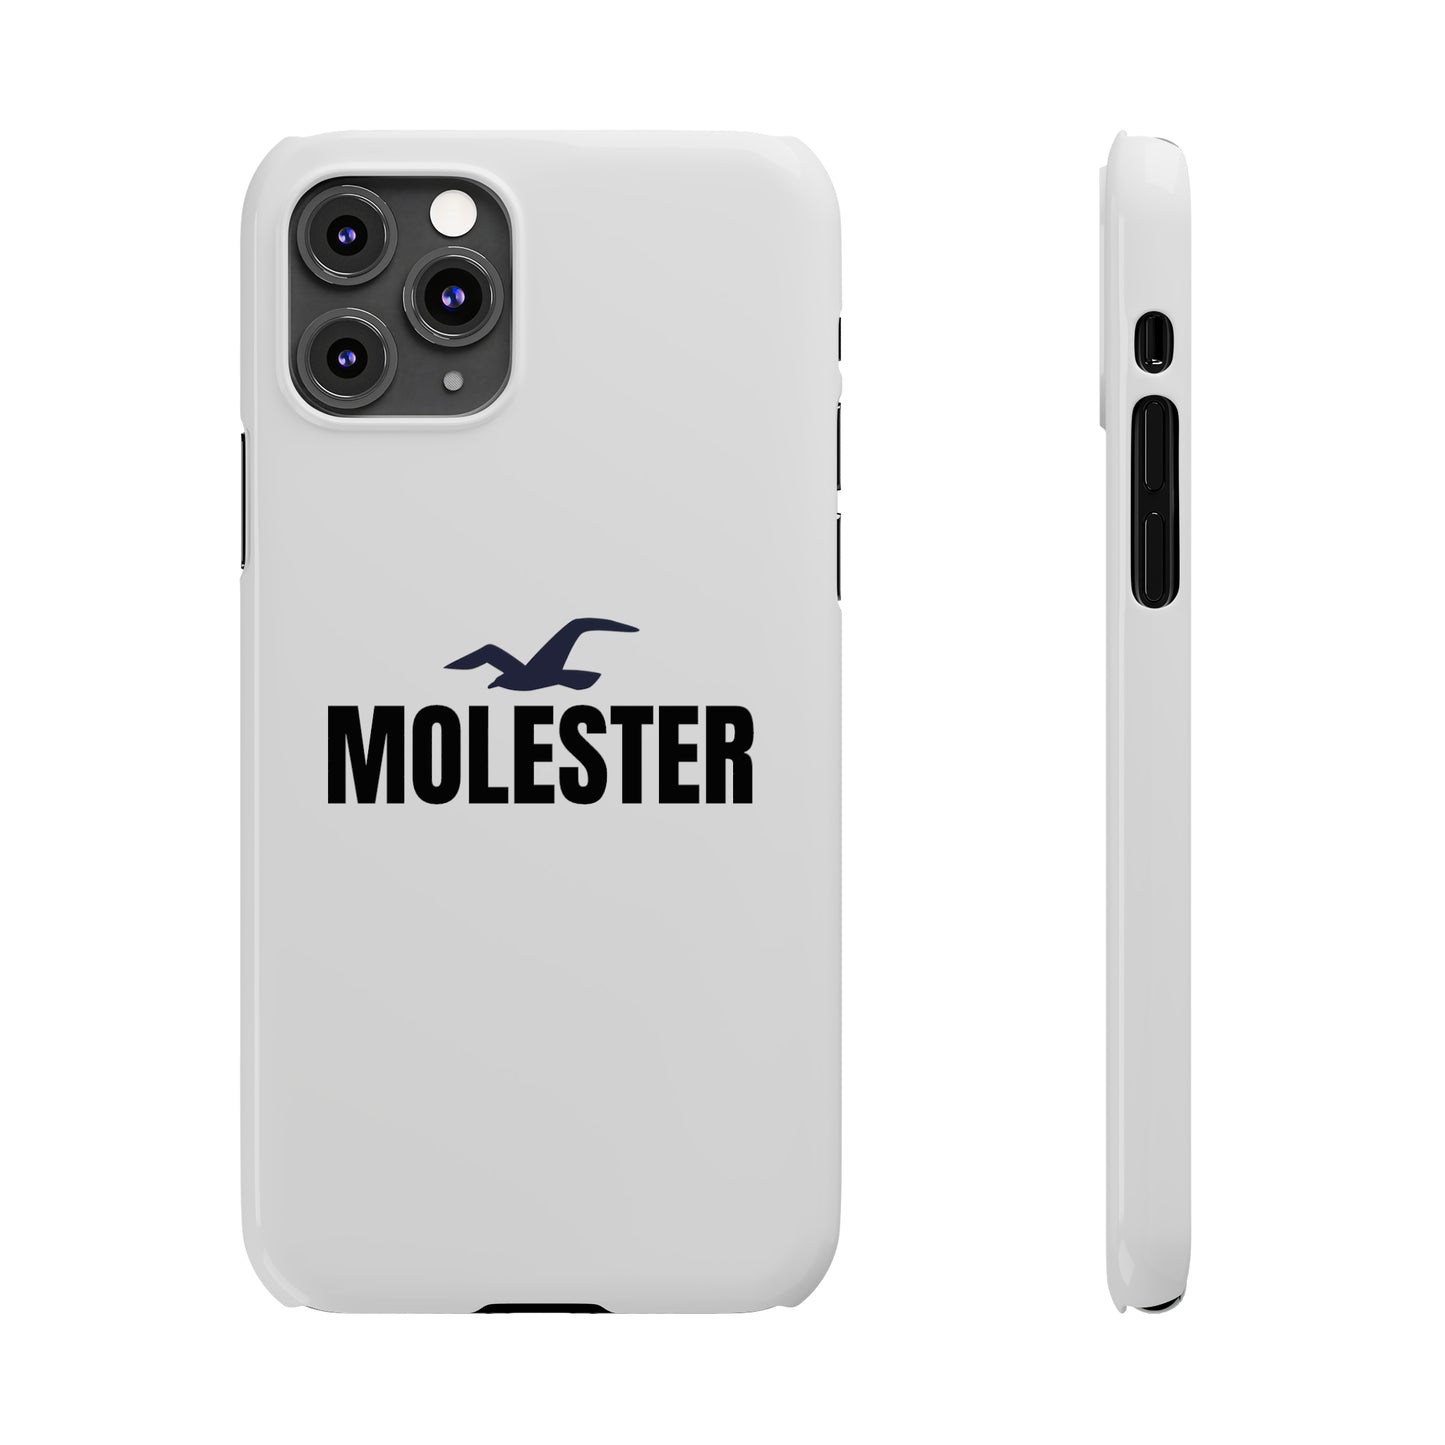 "Molester" MagStrong Phone Case iPhone 11 Pro